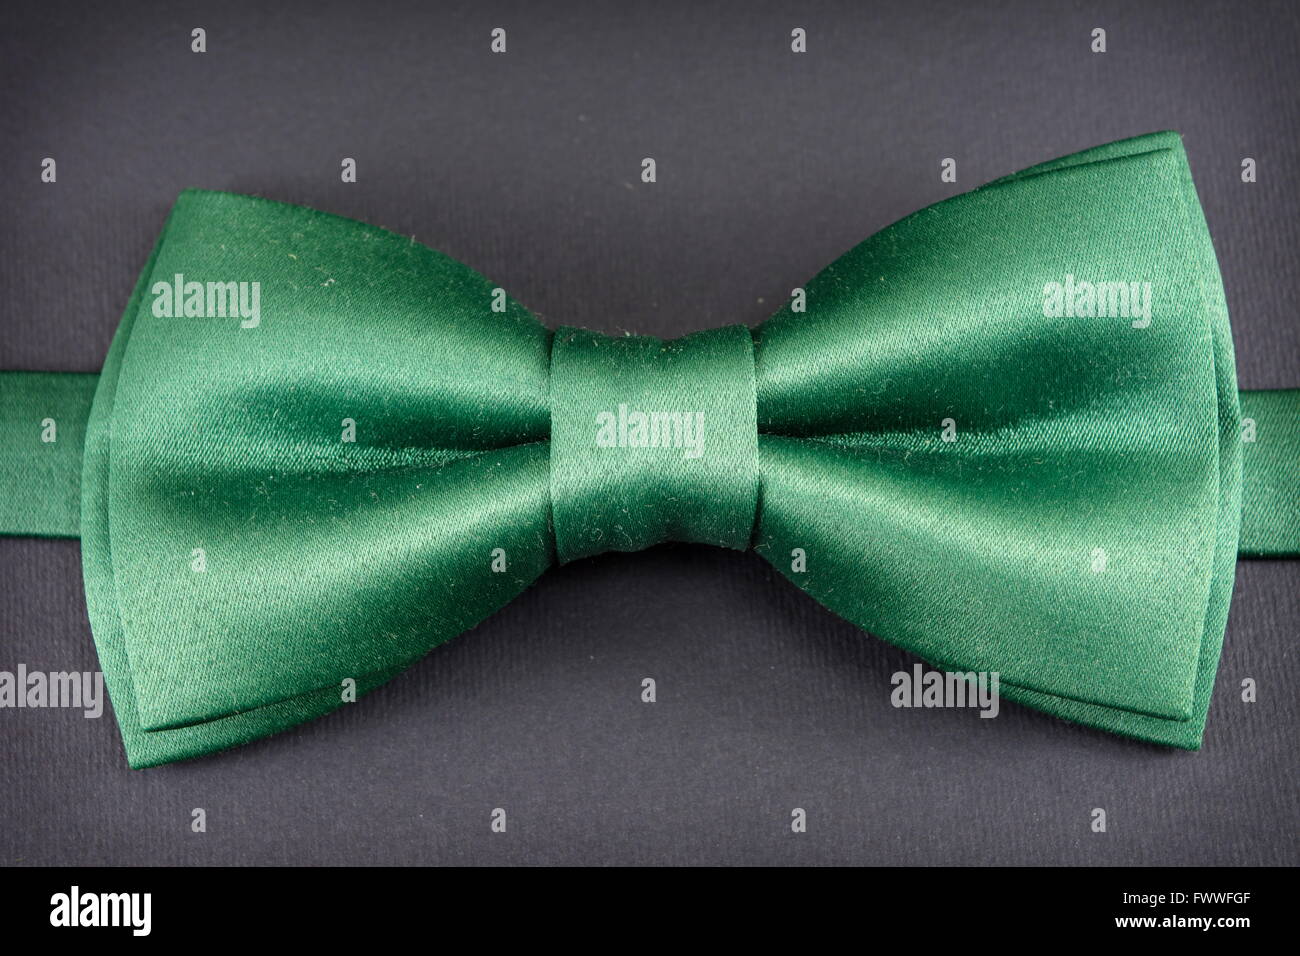 Green bow tie on dark background Stock Photo